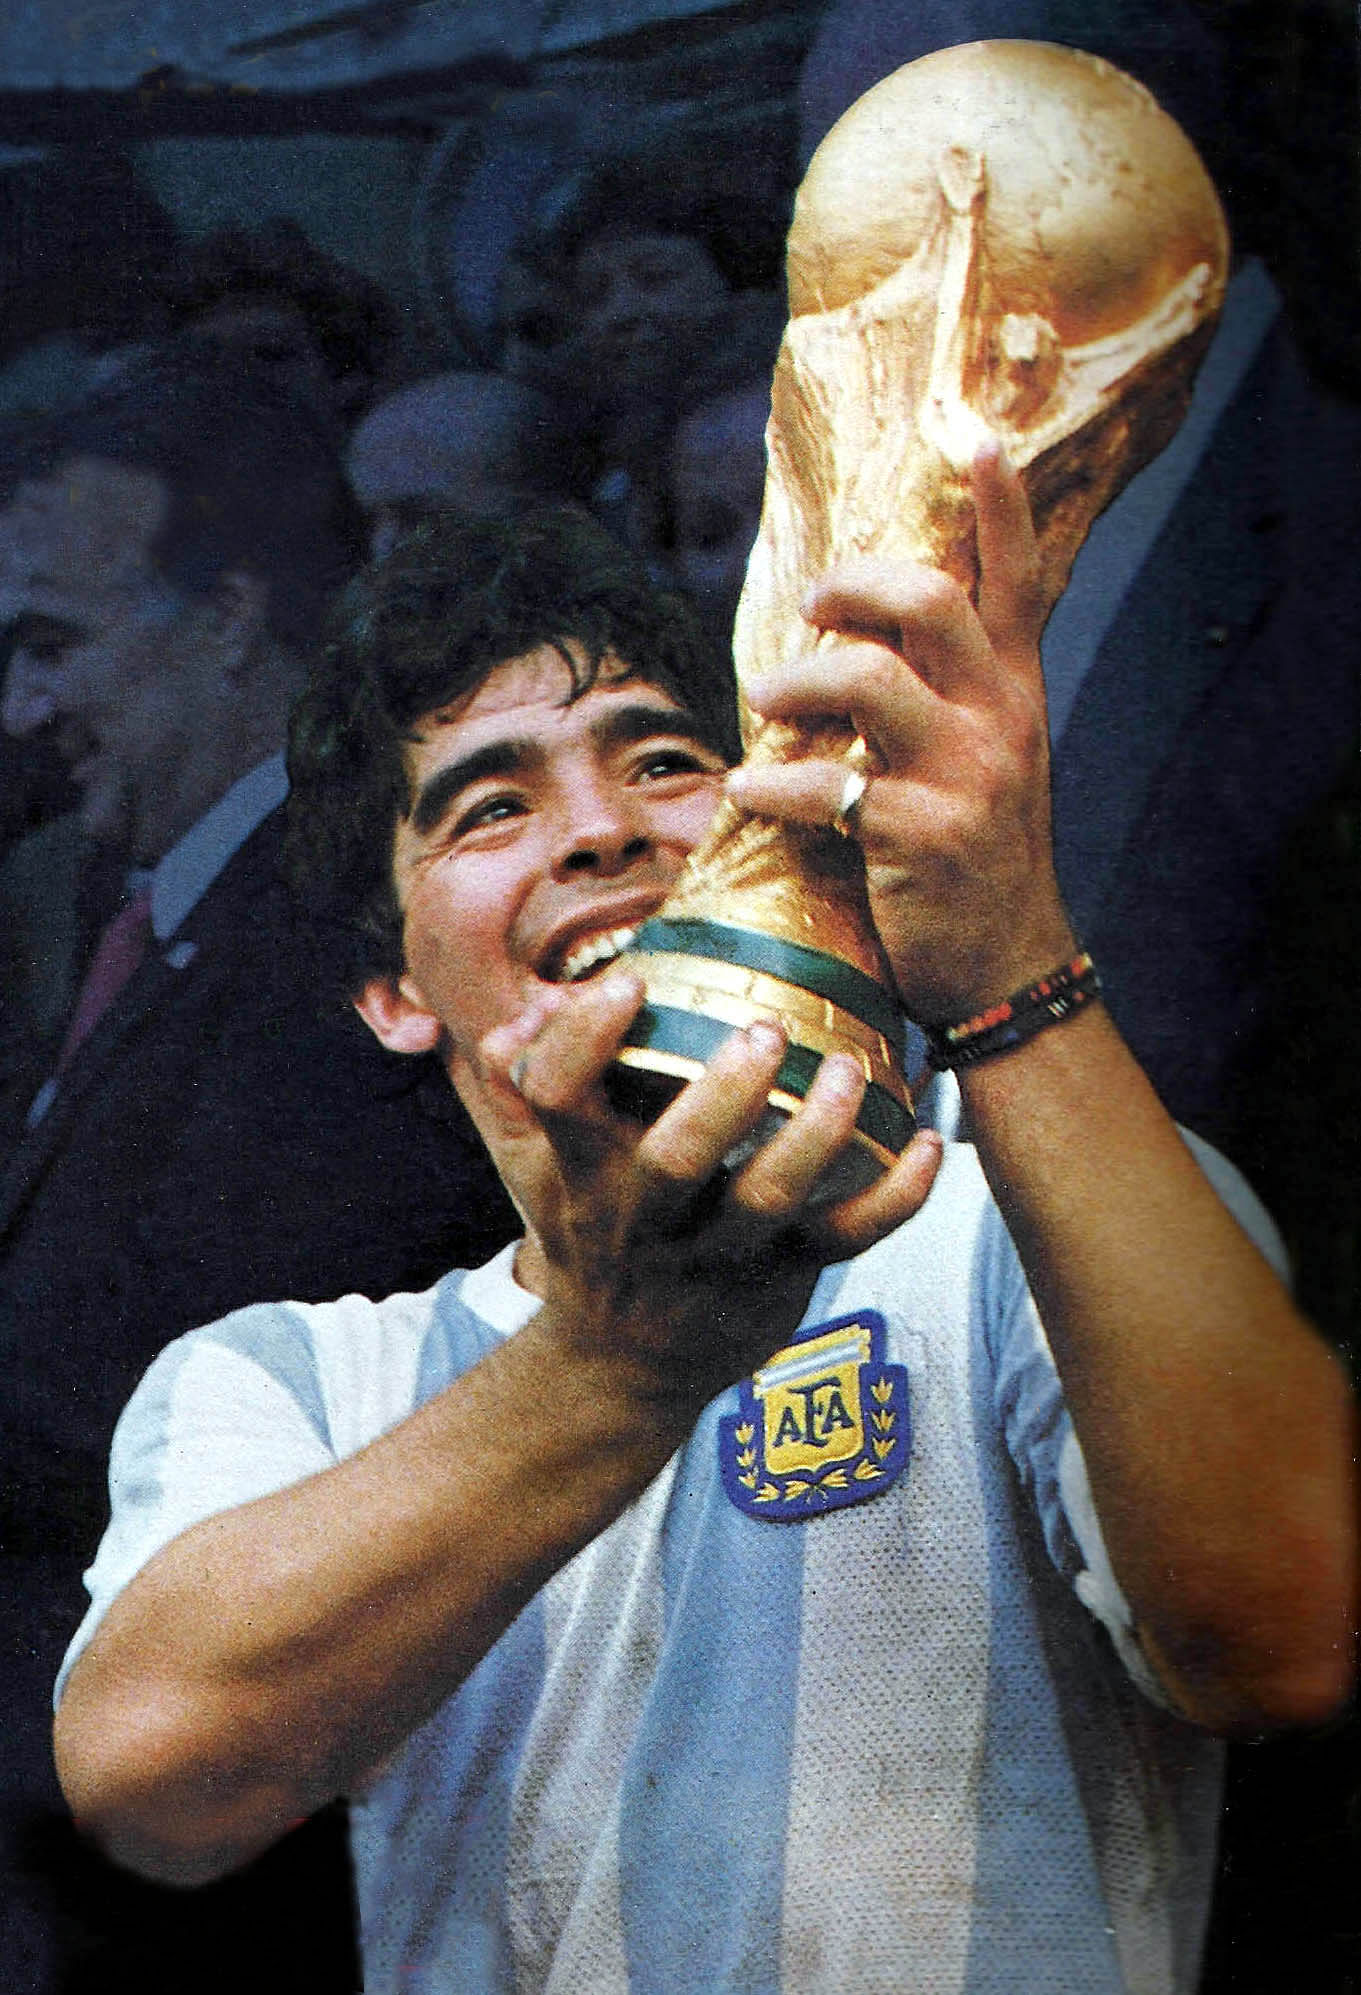 20201125_wb_maradona-15-1986.jpg